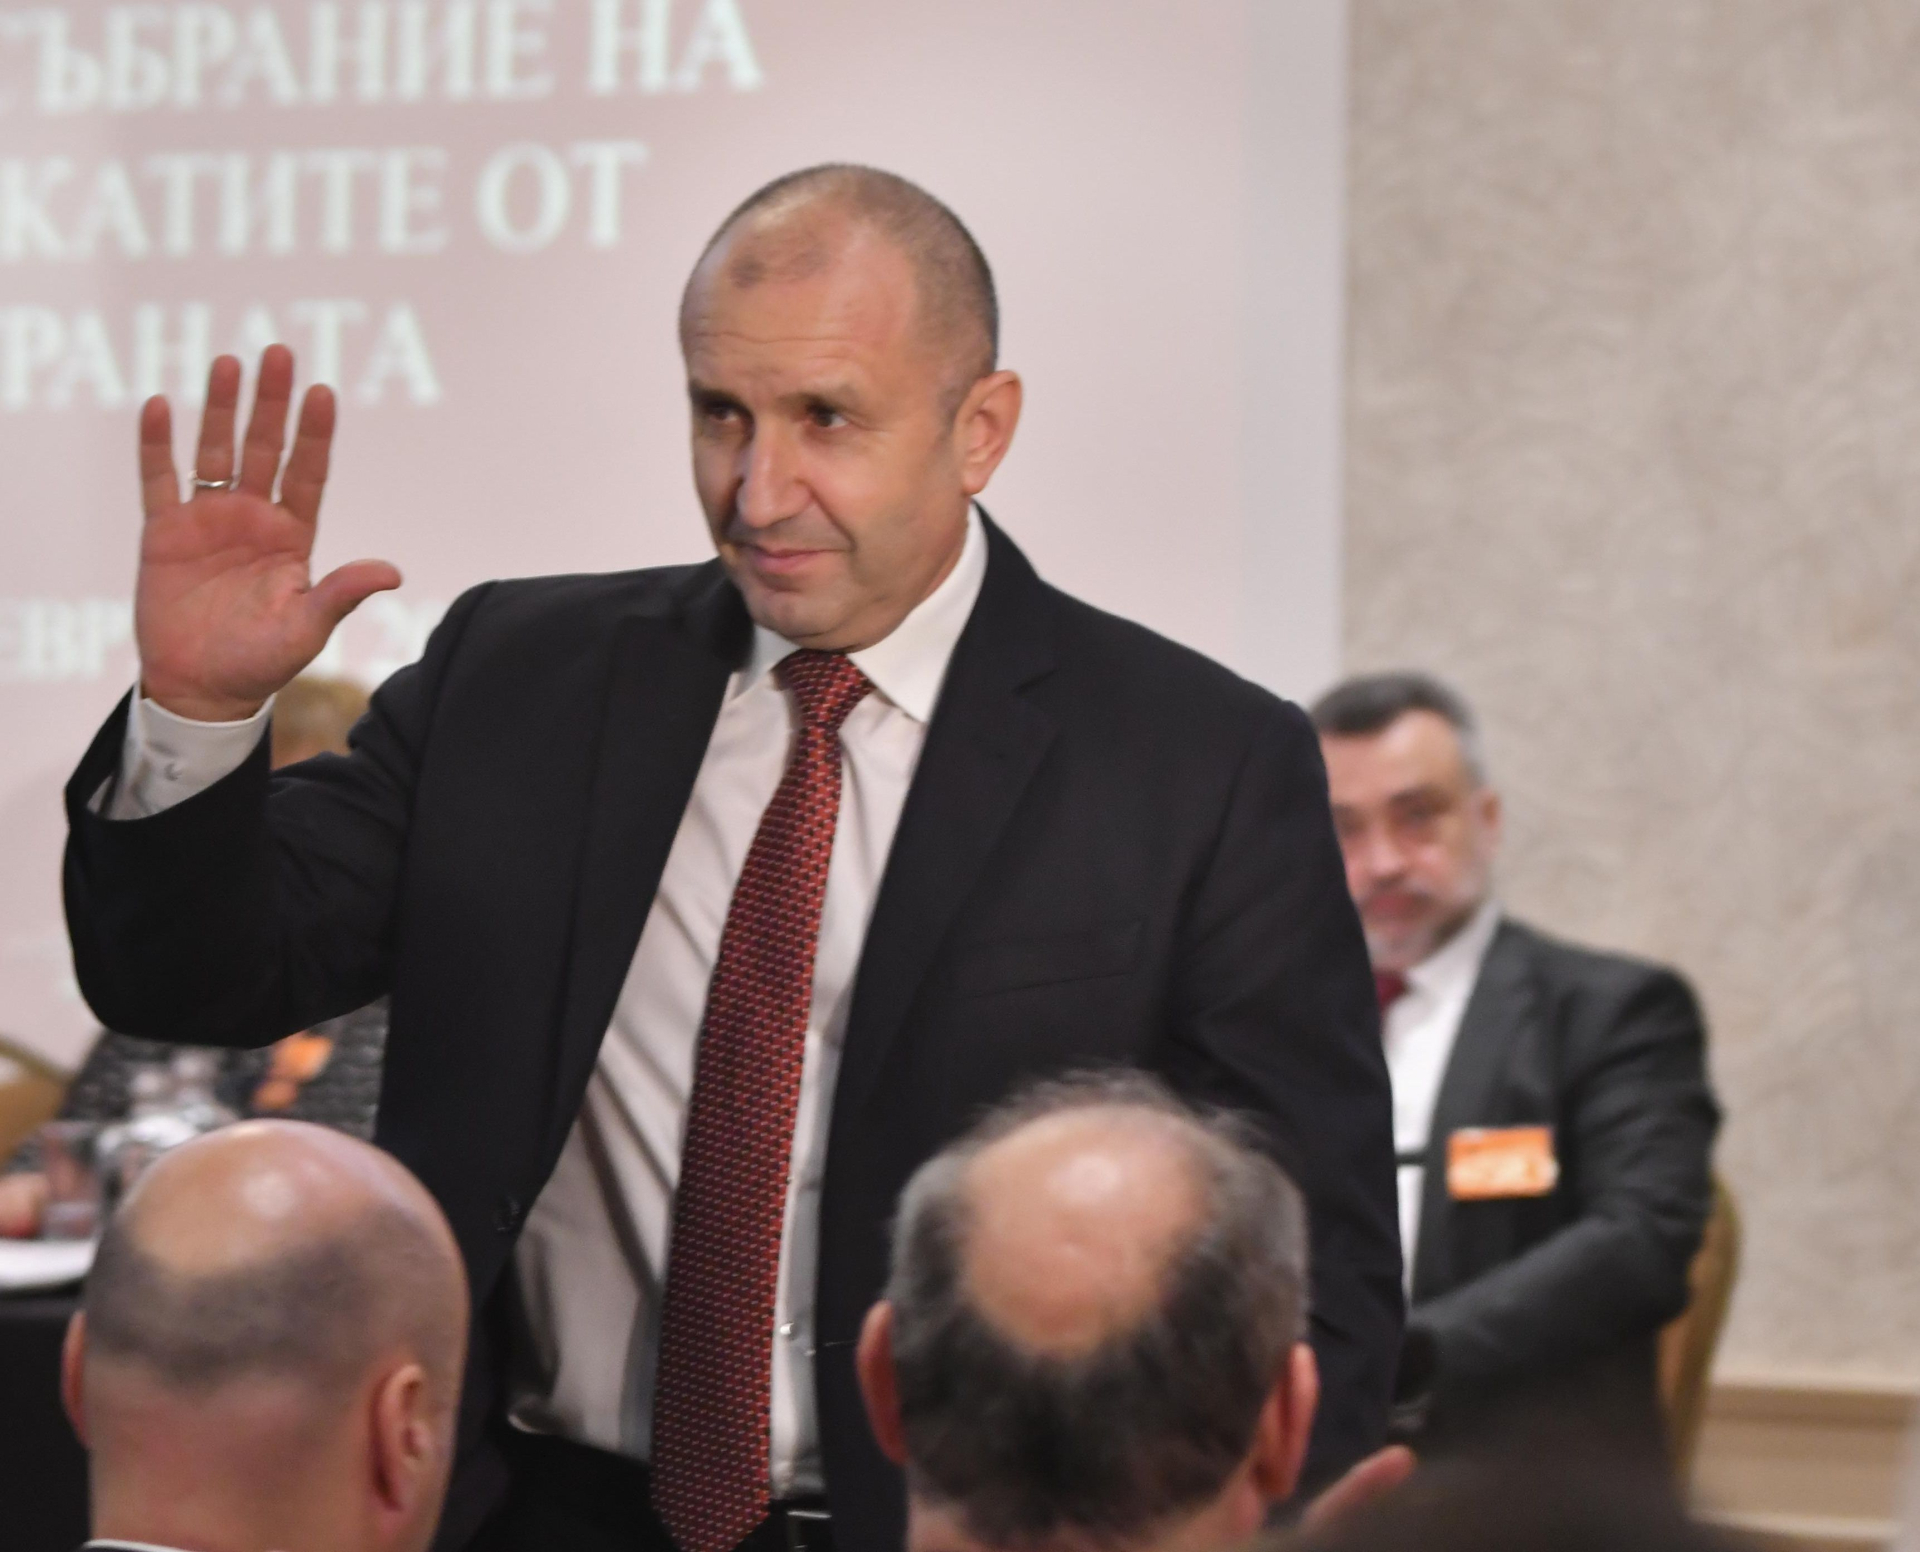 Радев закова президента на РСМ за непристойните му думи